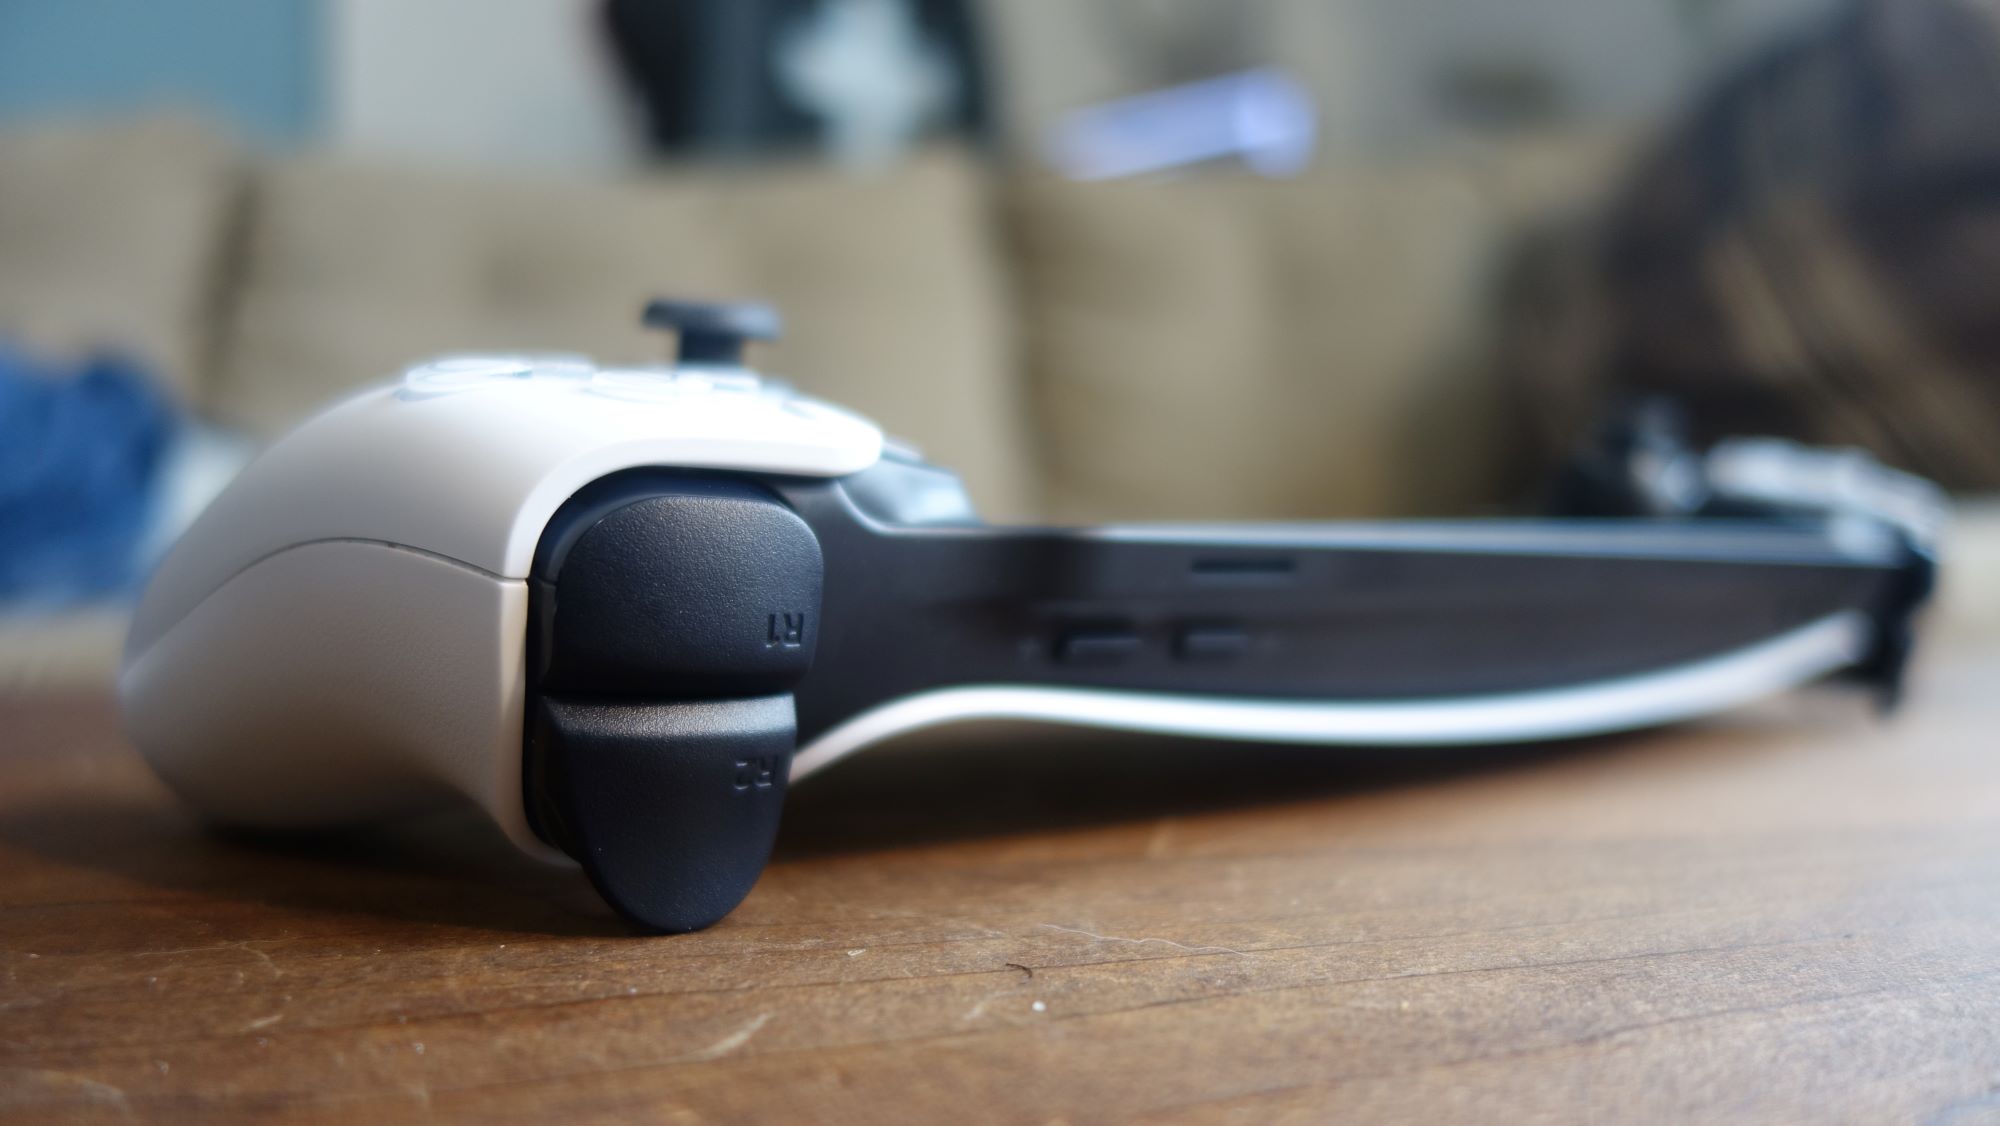 PlayStation Portal review: streaming handheld cuts corners